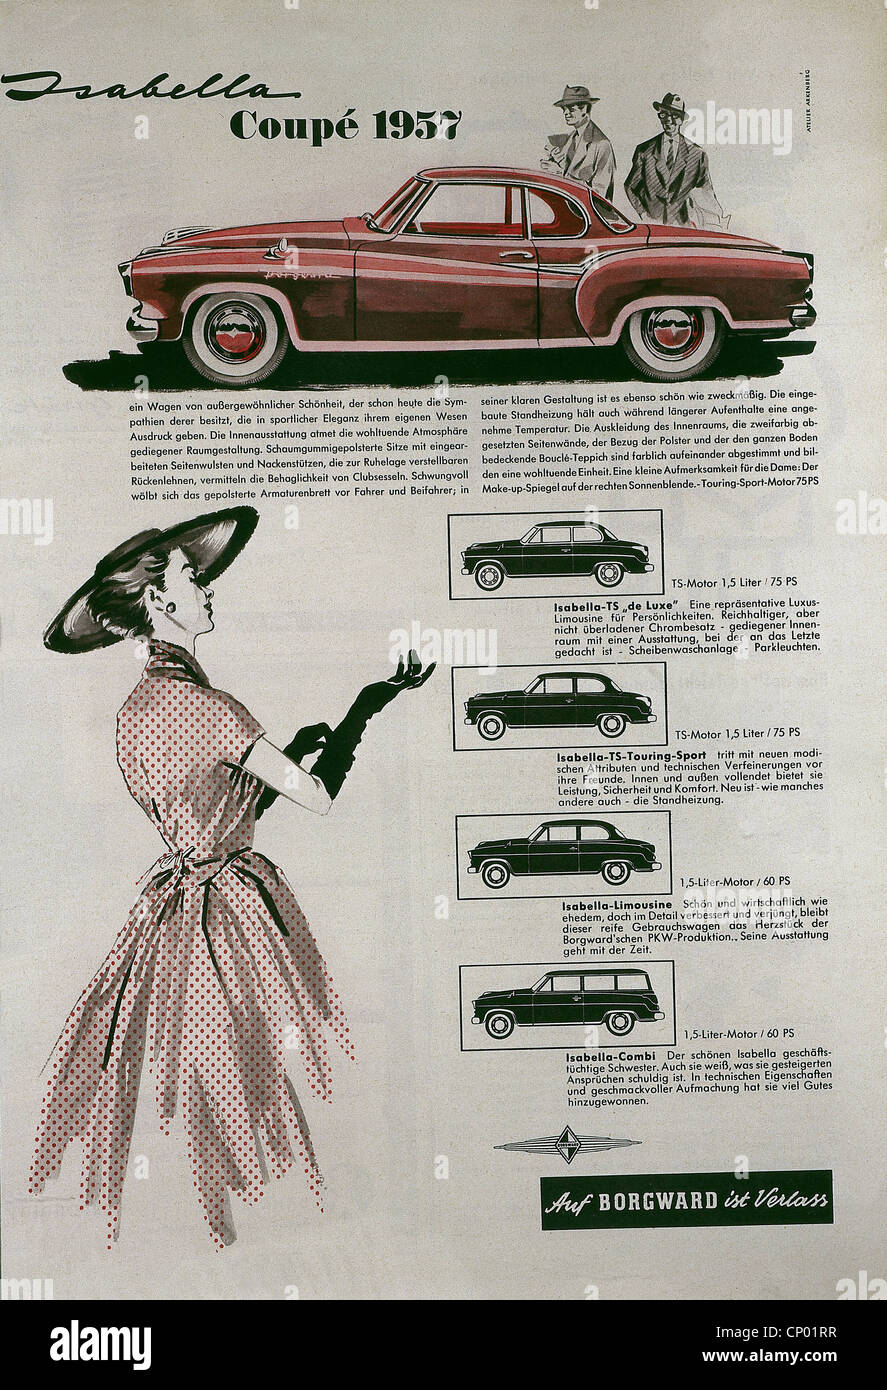 https://c8.alamy.com/comp/CP01RR/advertising-automobiles-borgward-borgward-isabella-coupe-advertisement-CP01RR.jpg